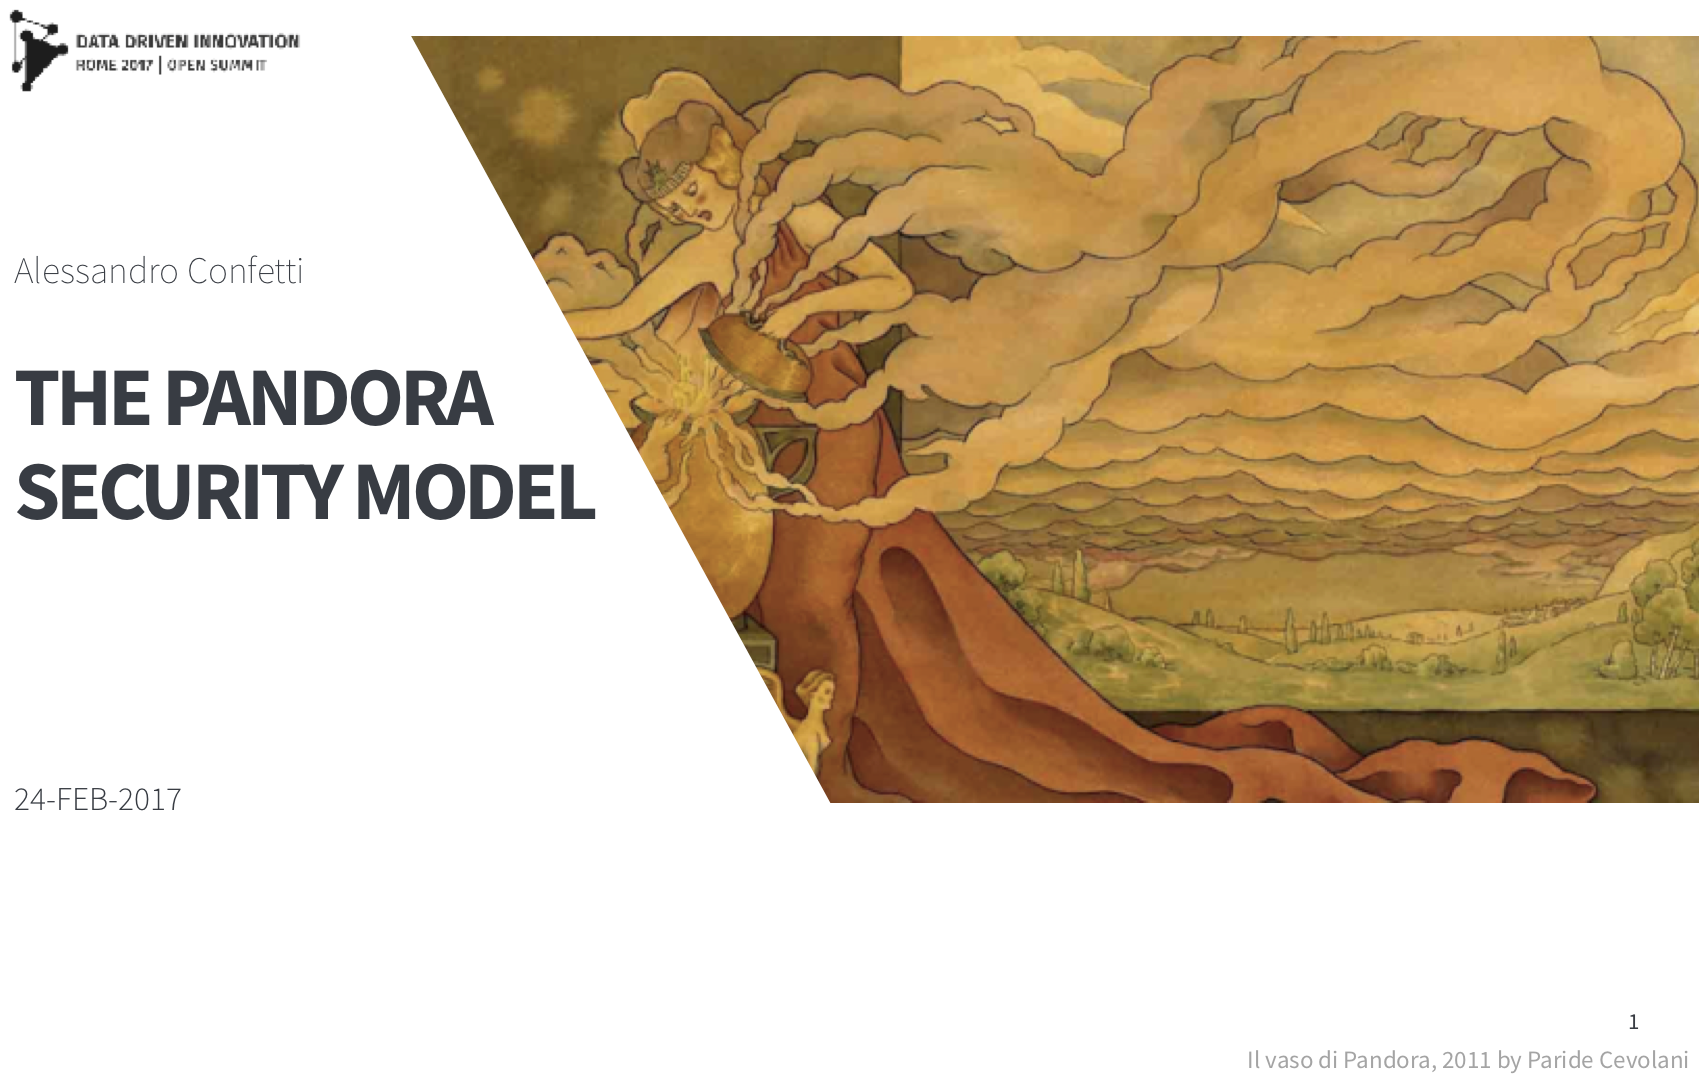 Talk: The pandora security model